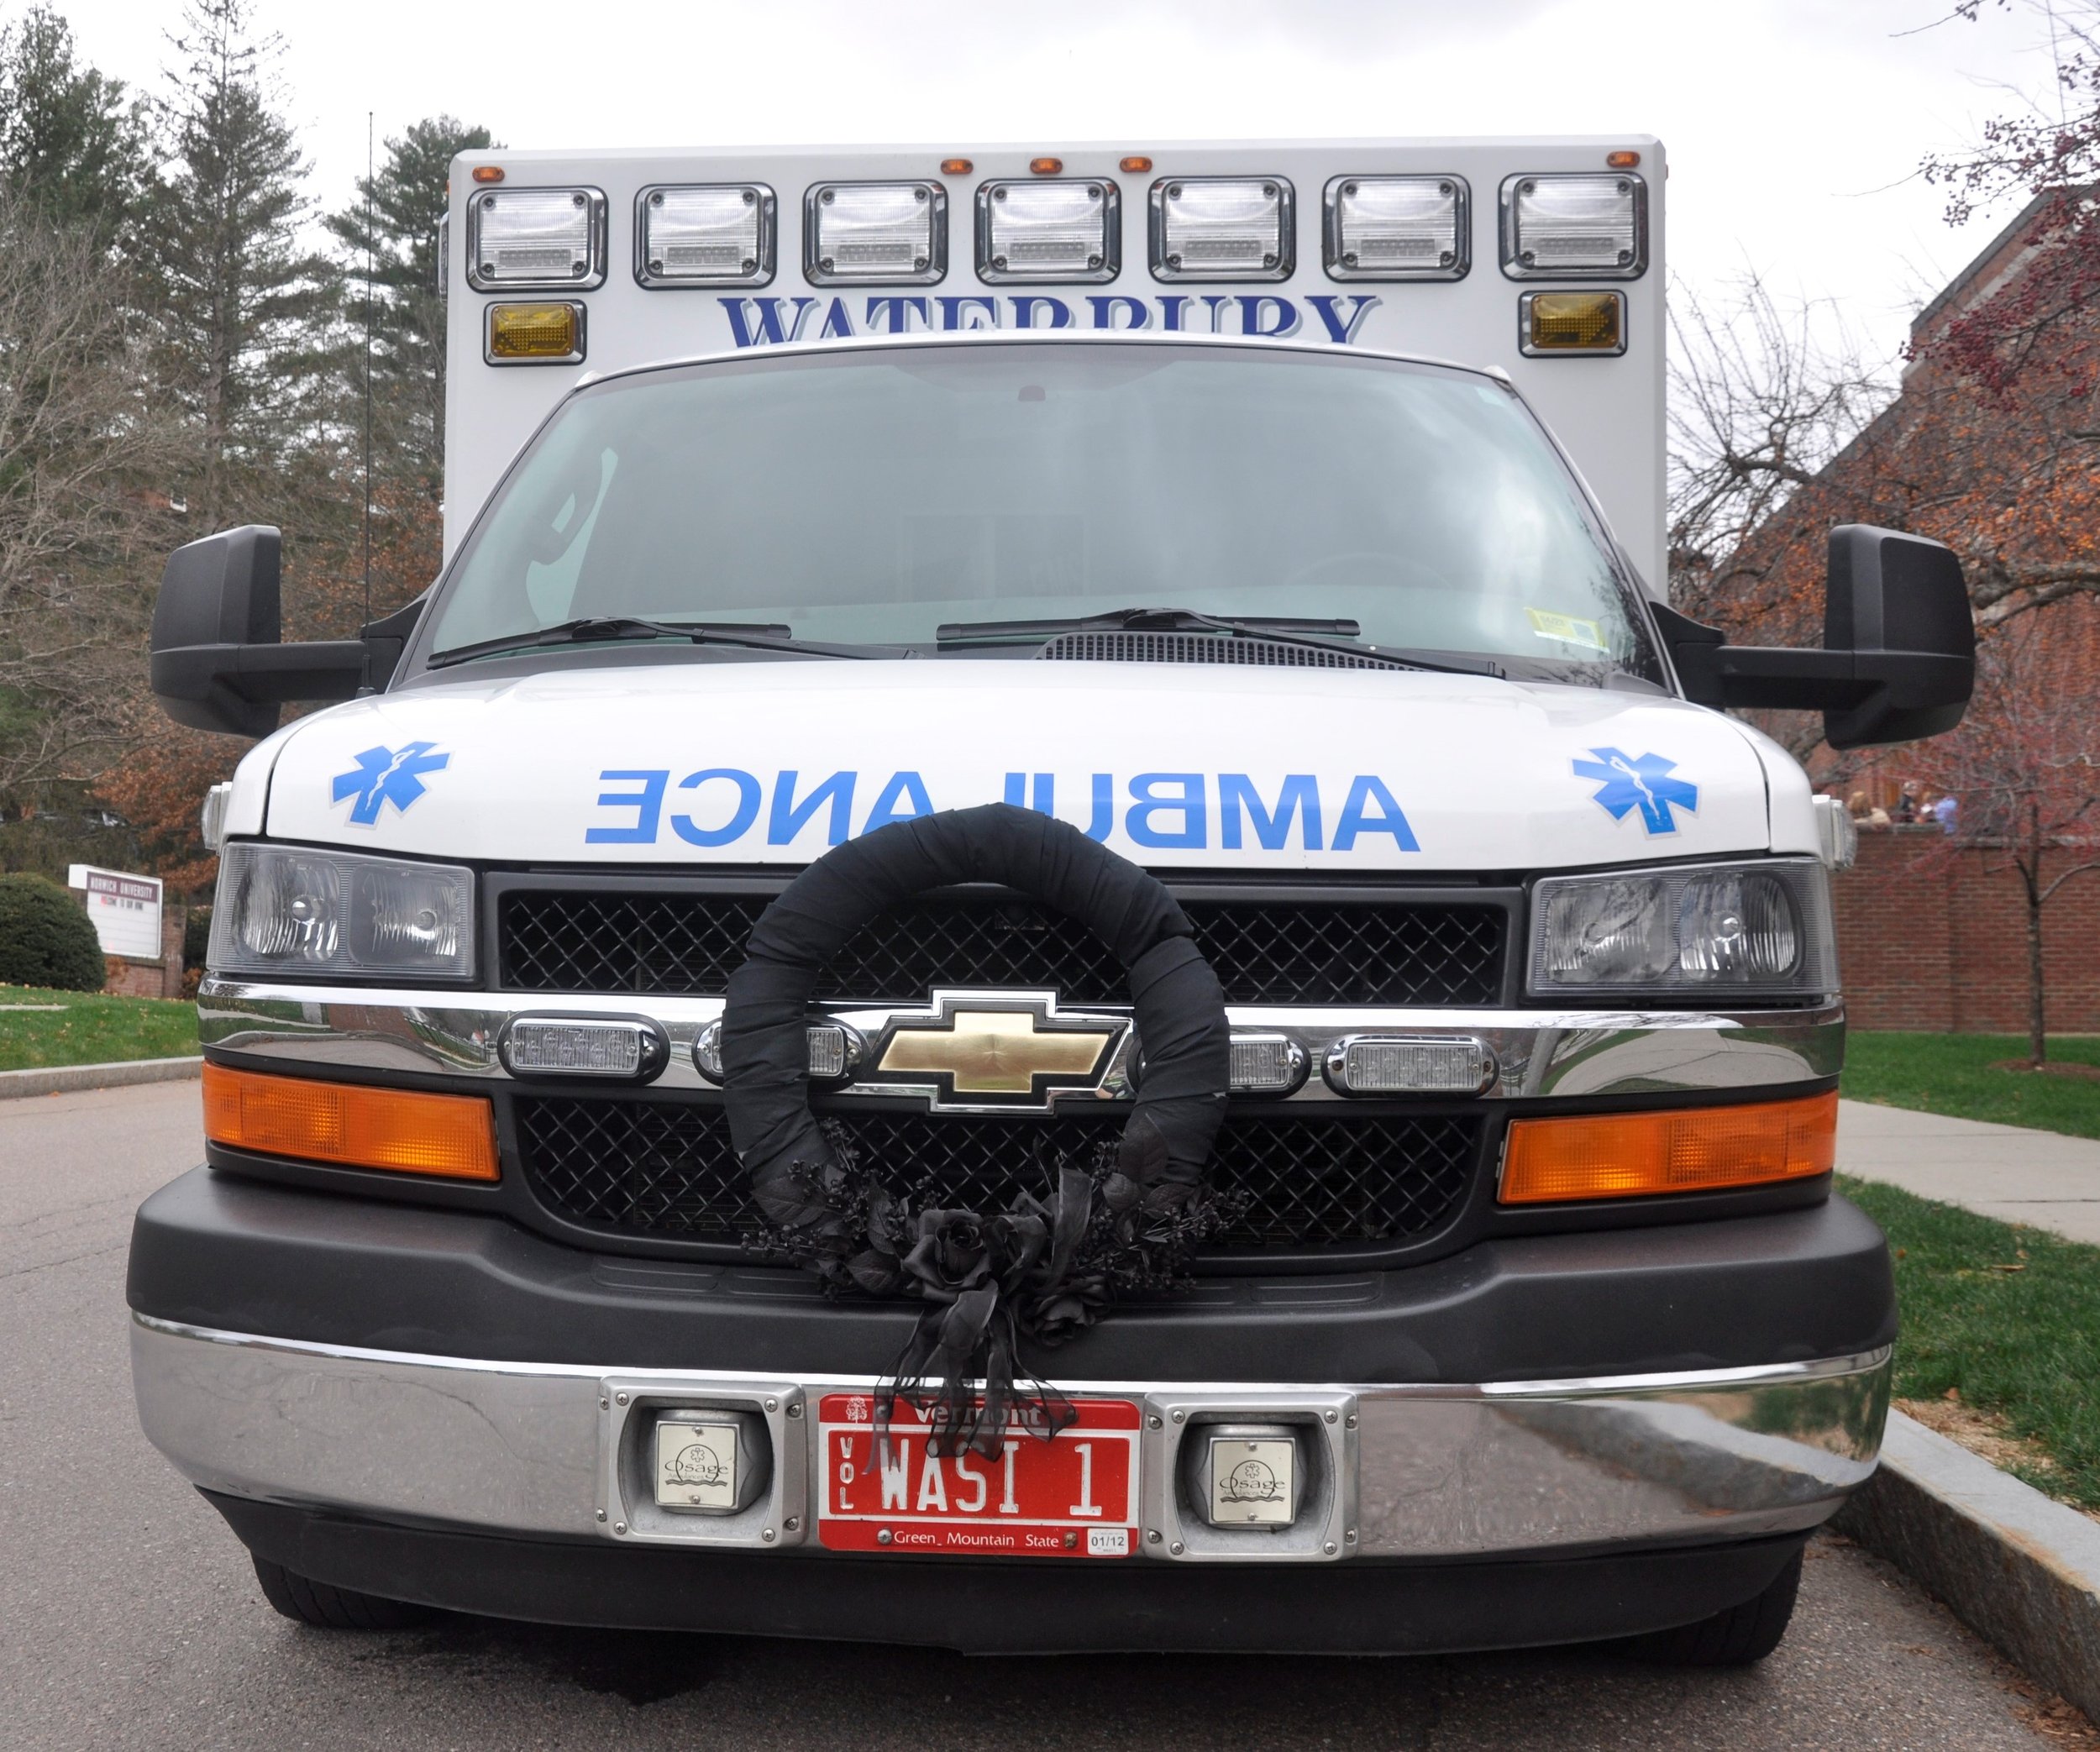  Waterbury Ambulance Service vehicles park beside Plumley Armory. Photo by Lisa Scagliotti 